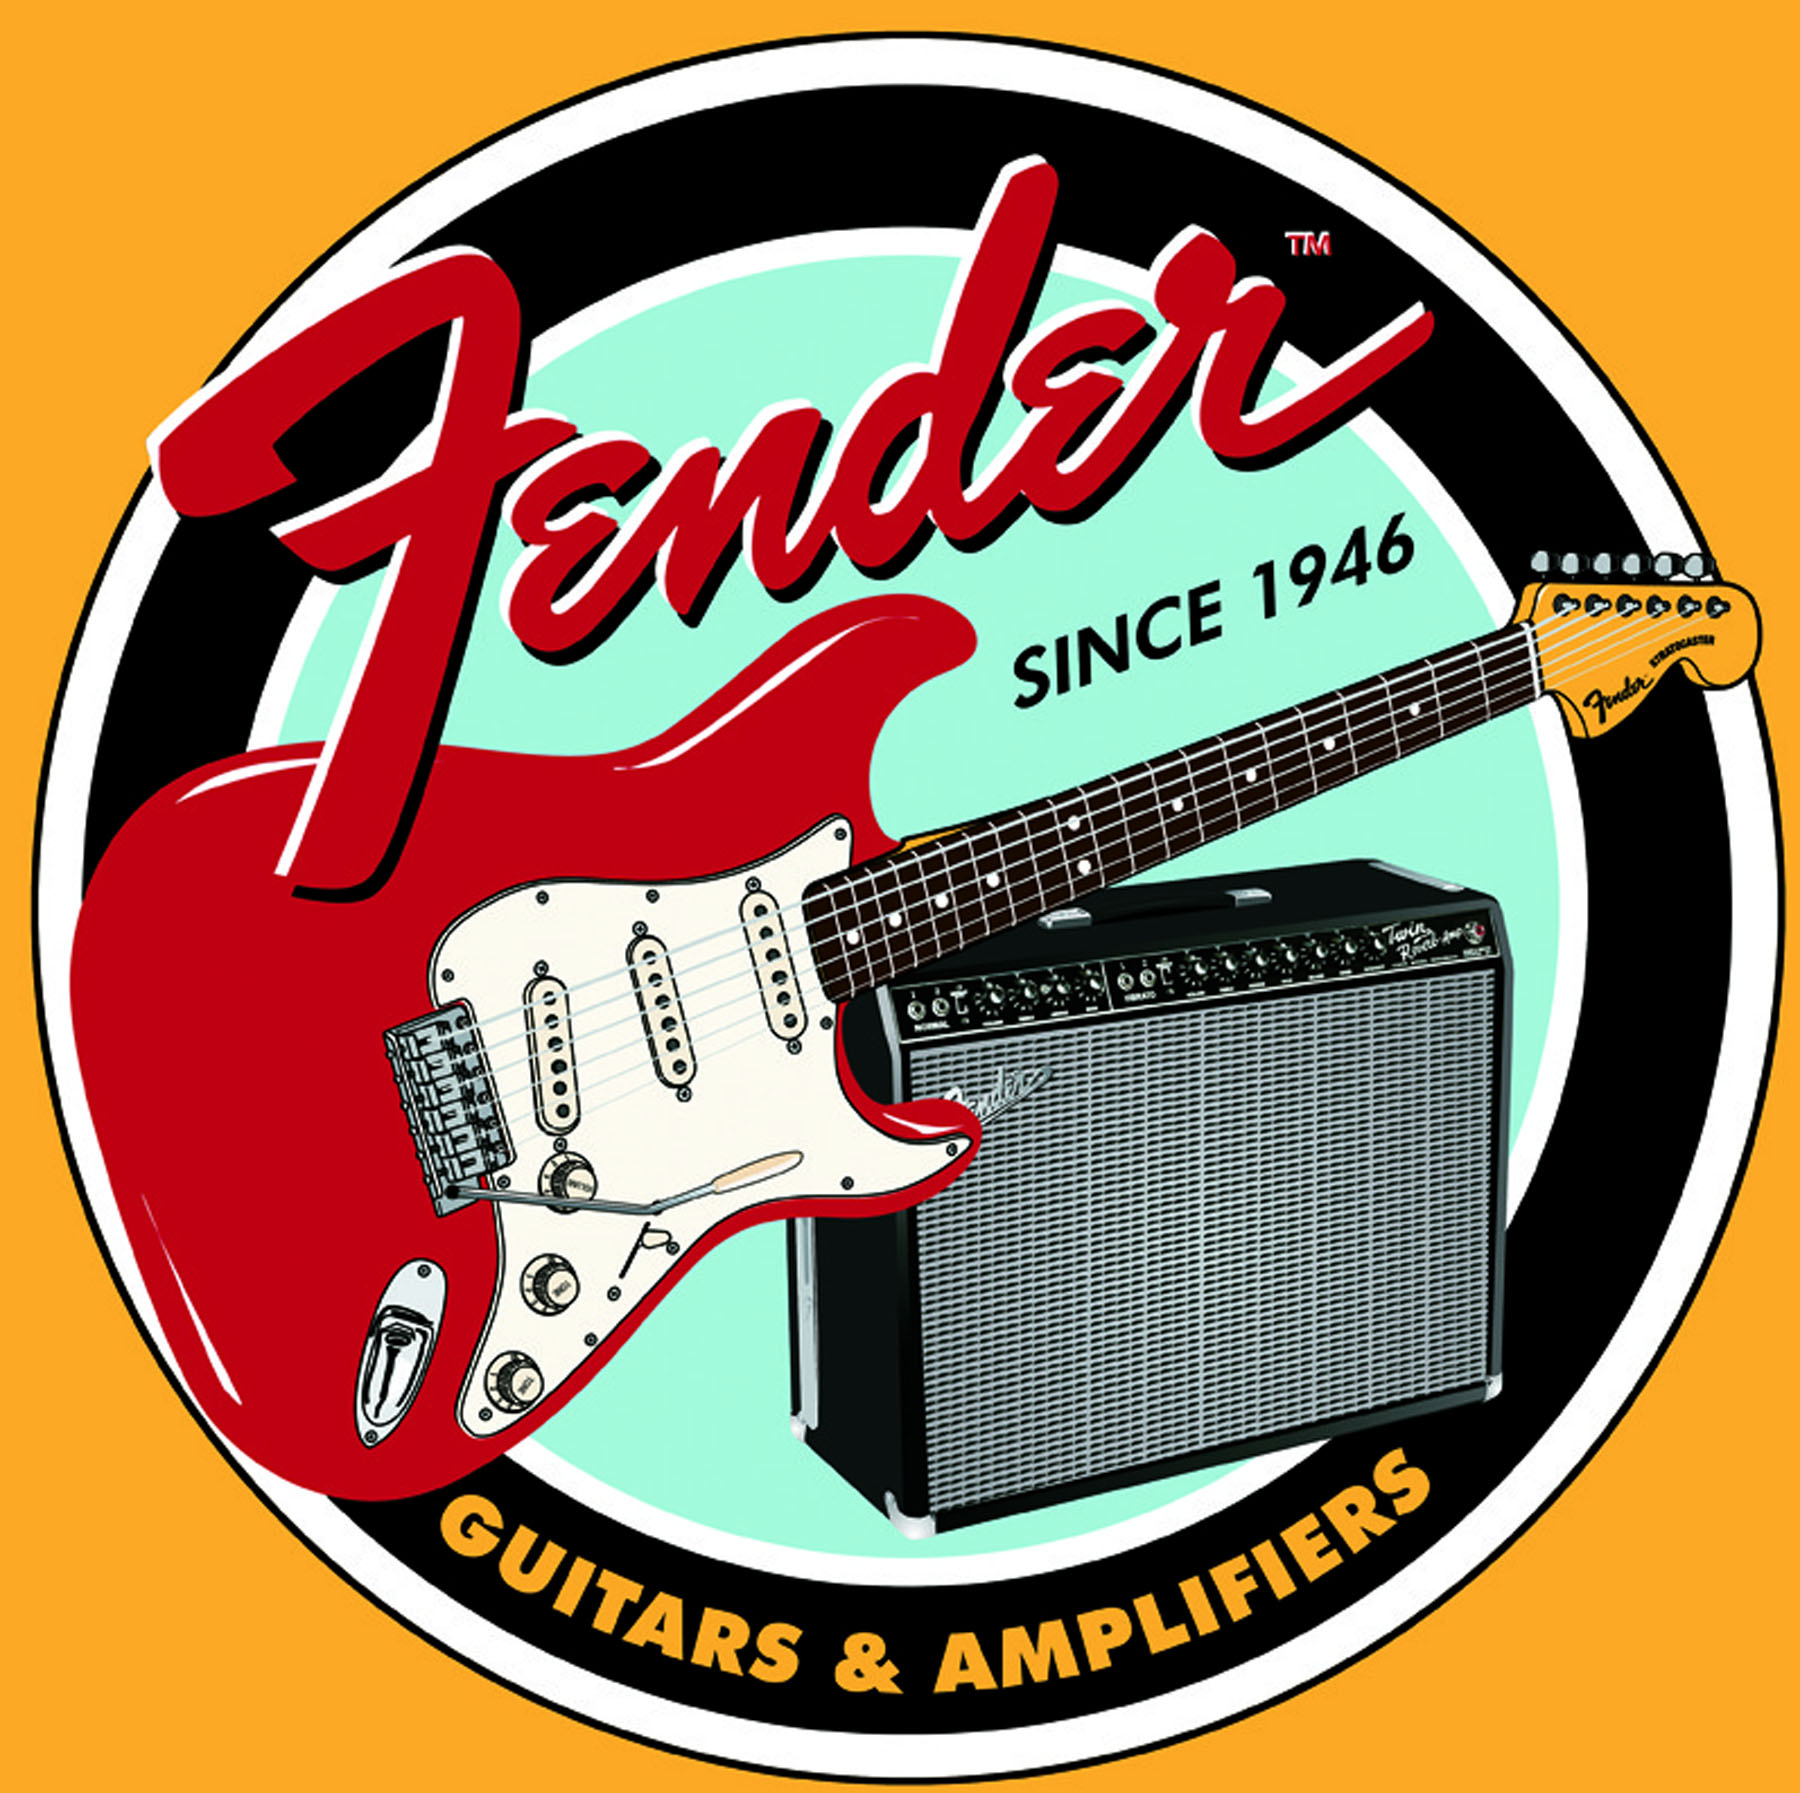 Since 1946. Наклейка электрогитара. Электрогитара эмблема. Fender логотип. Наклейки на гитару Fender.